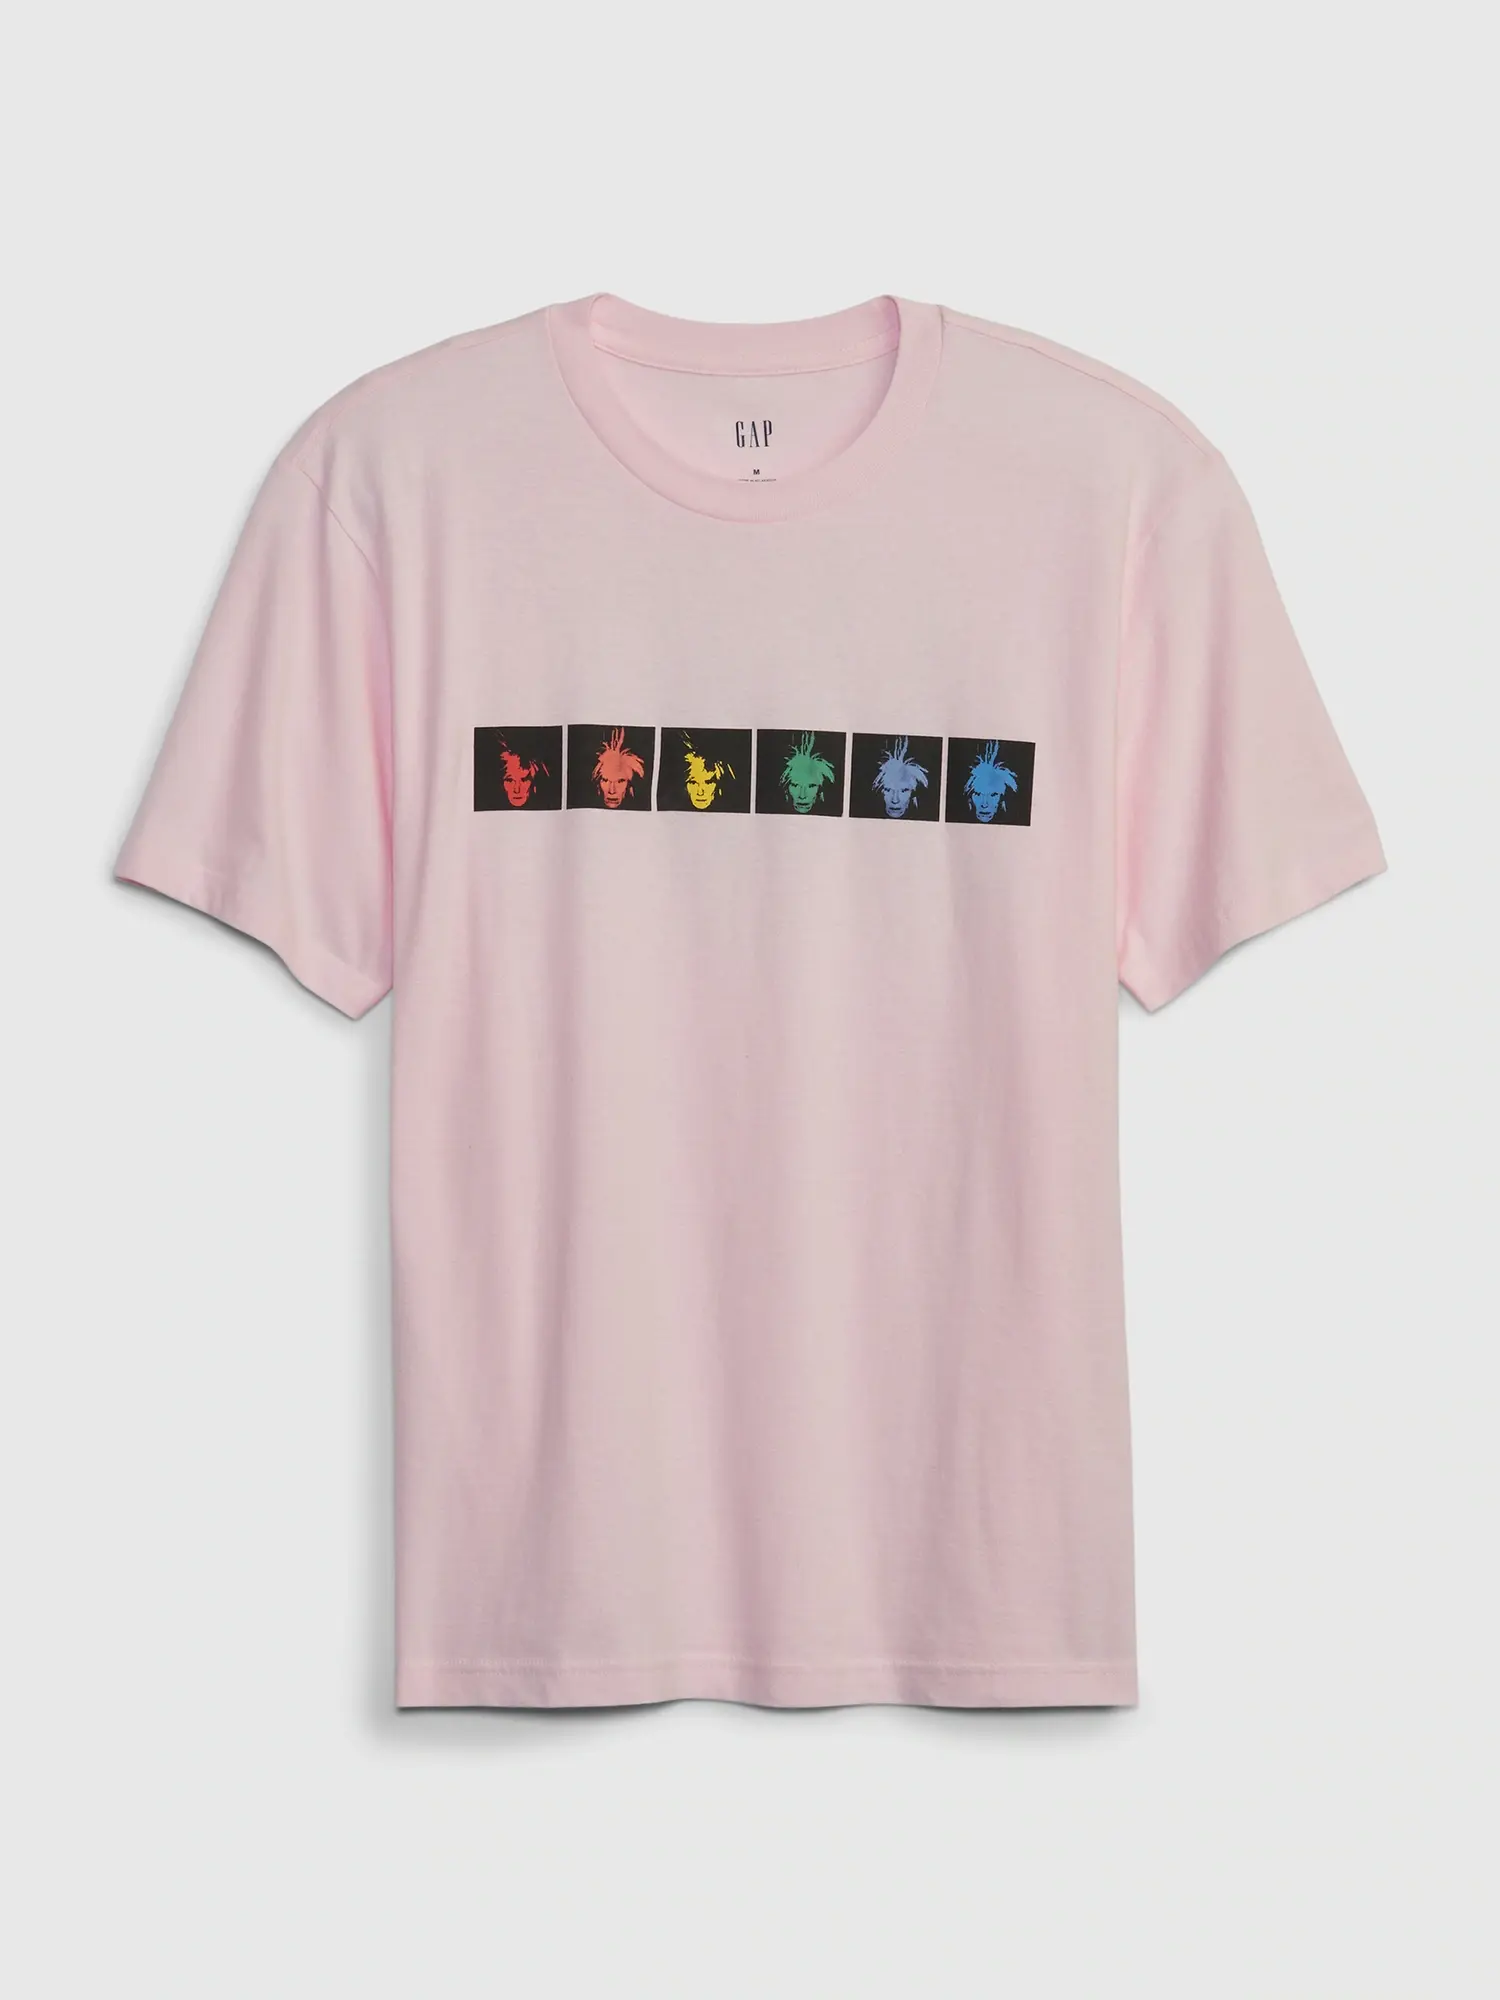 Gap &#215 Andy Warhol Pride Graphic T-Shirt pink. 1